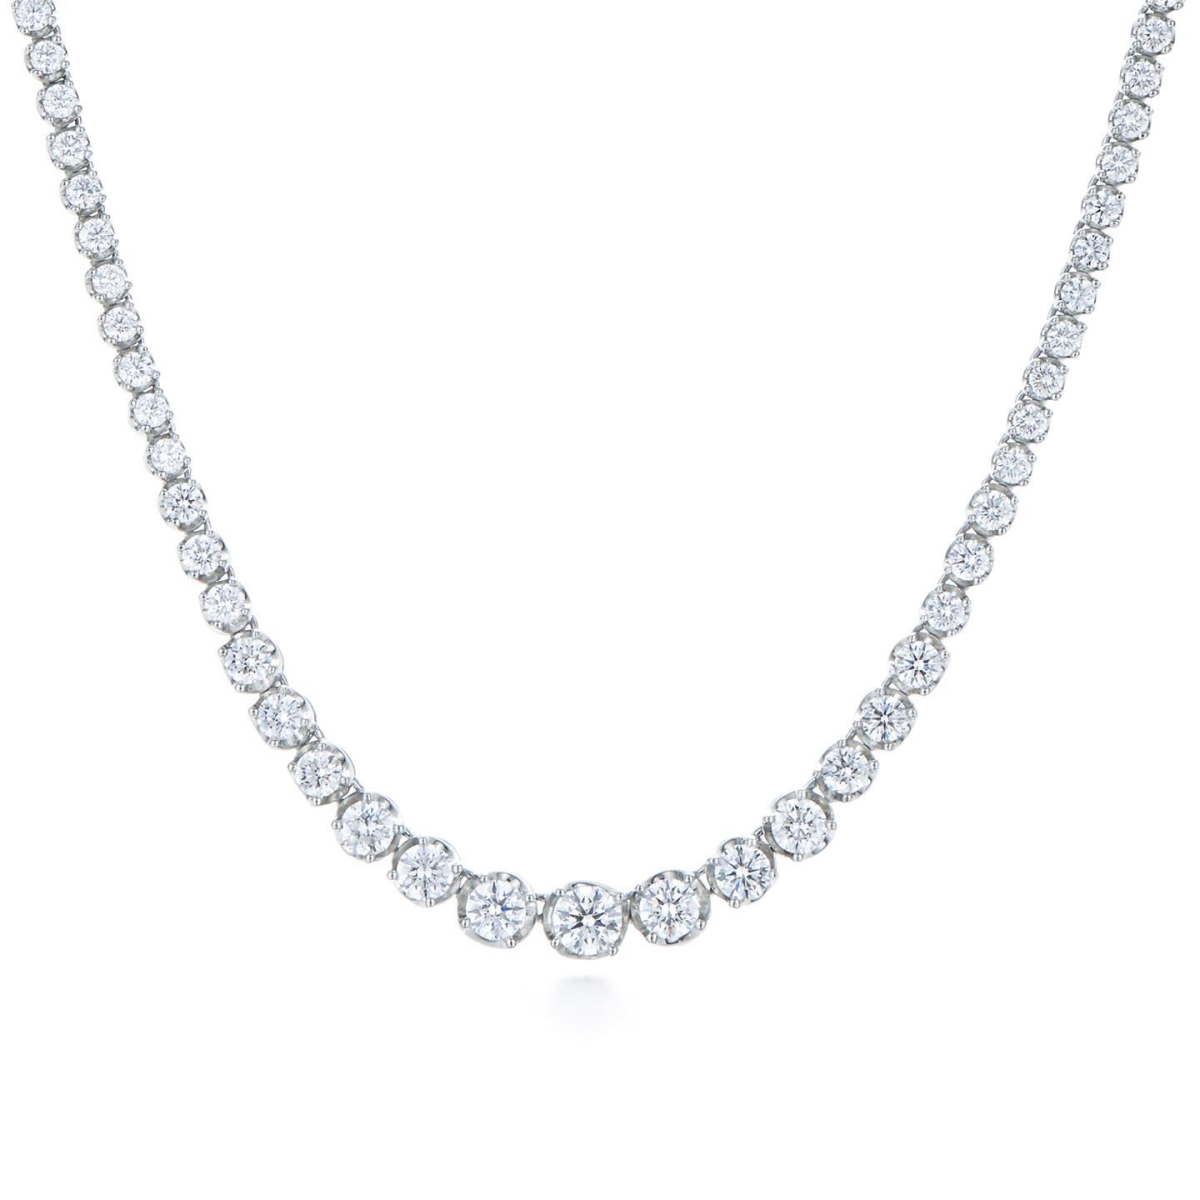 40594 15 Carat Round Cut Sparkling Diamonds Ladies Necklace - 14k White Gold